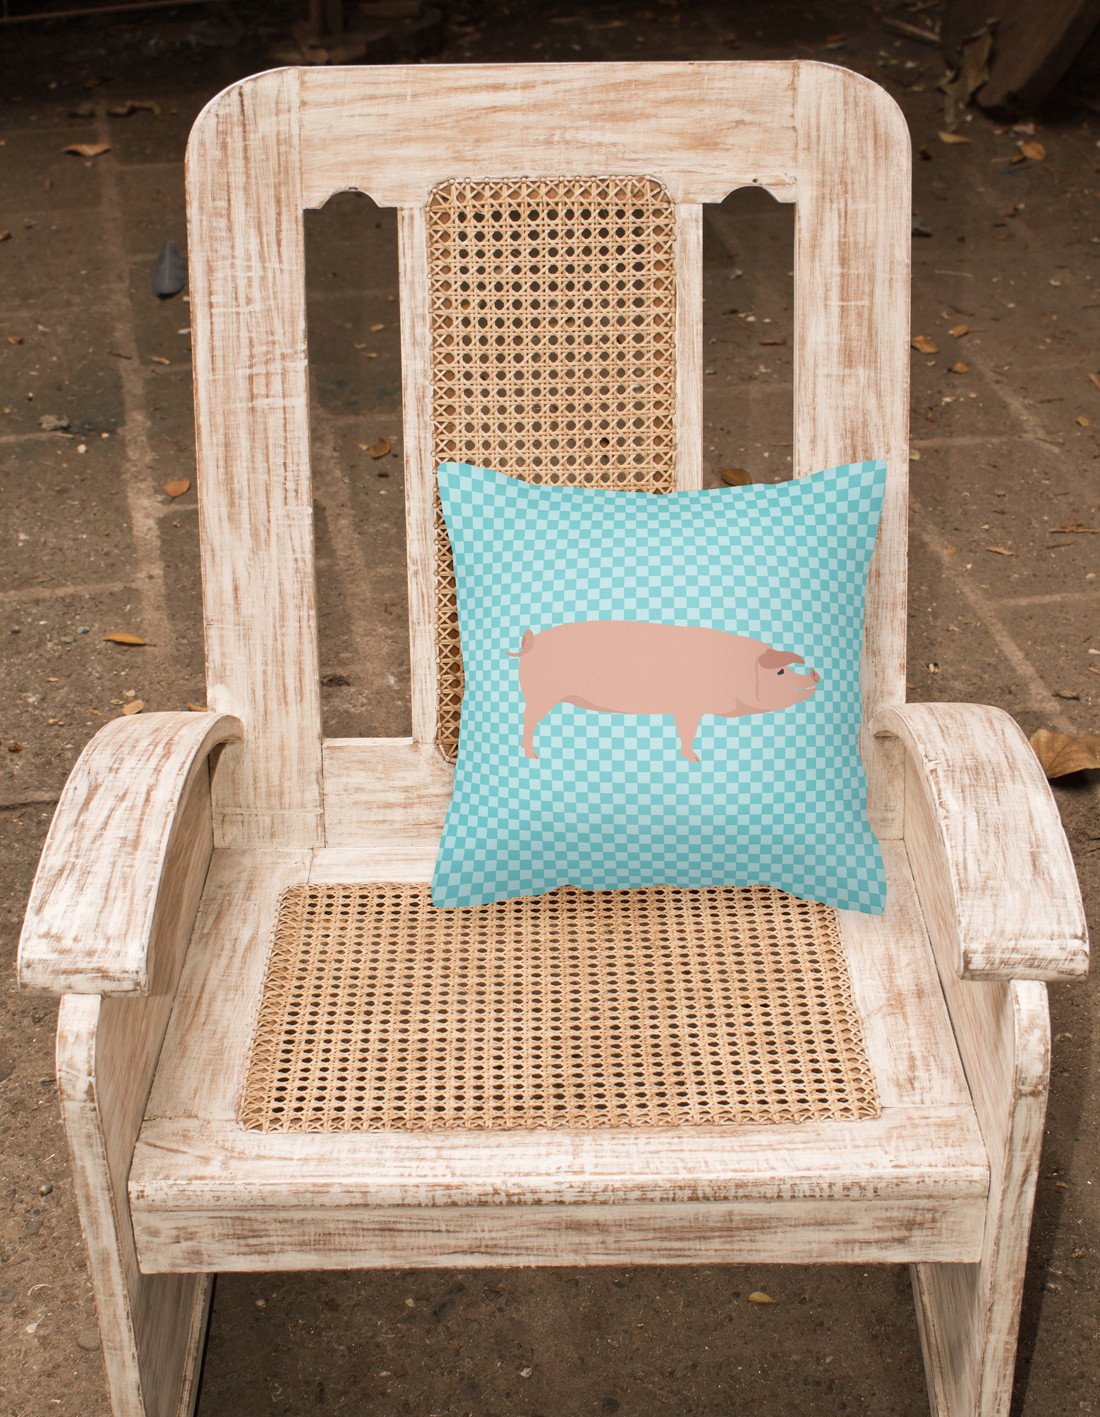 American Landrace Pig Blue Check Fabric Decorative Pillow BB8106PW1818 by Caroline's Treasures